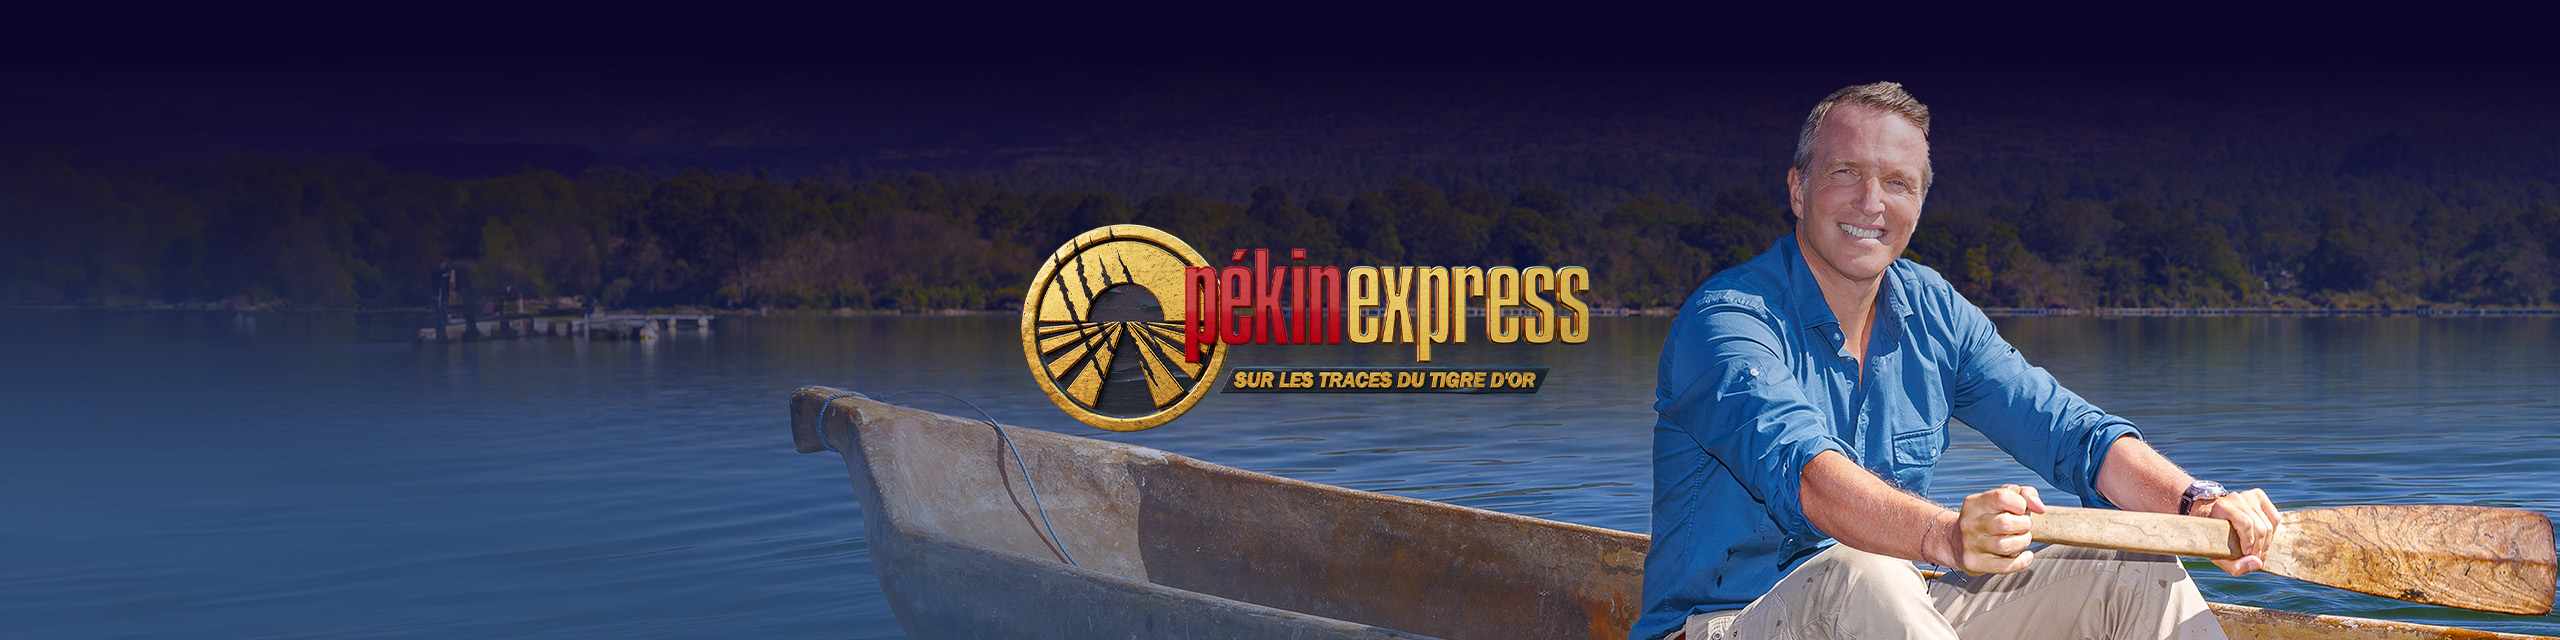 Pékin express saison 18